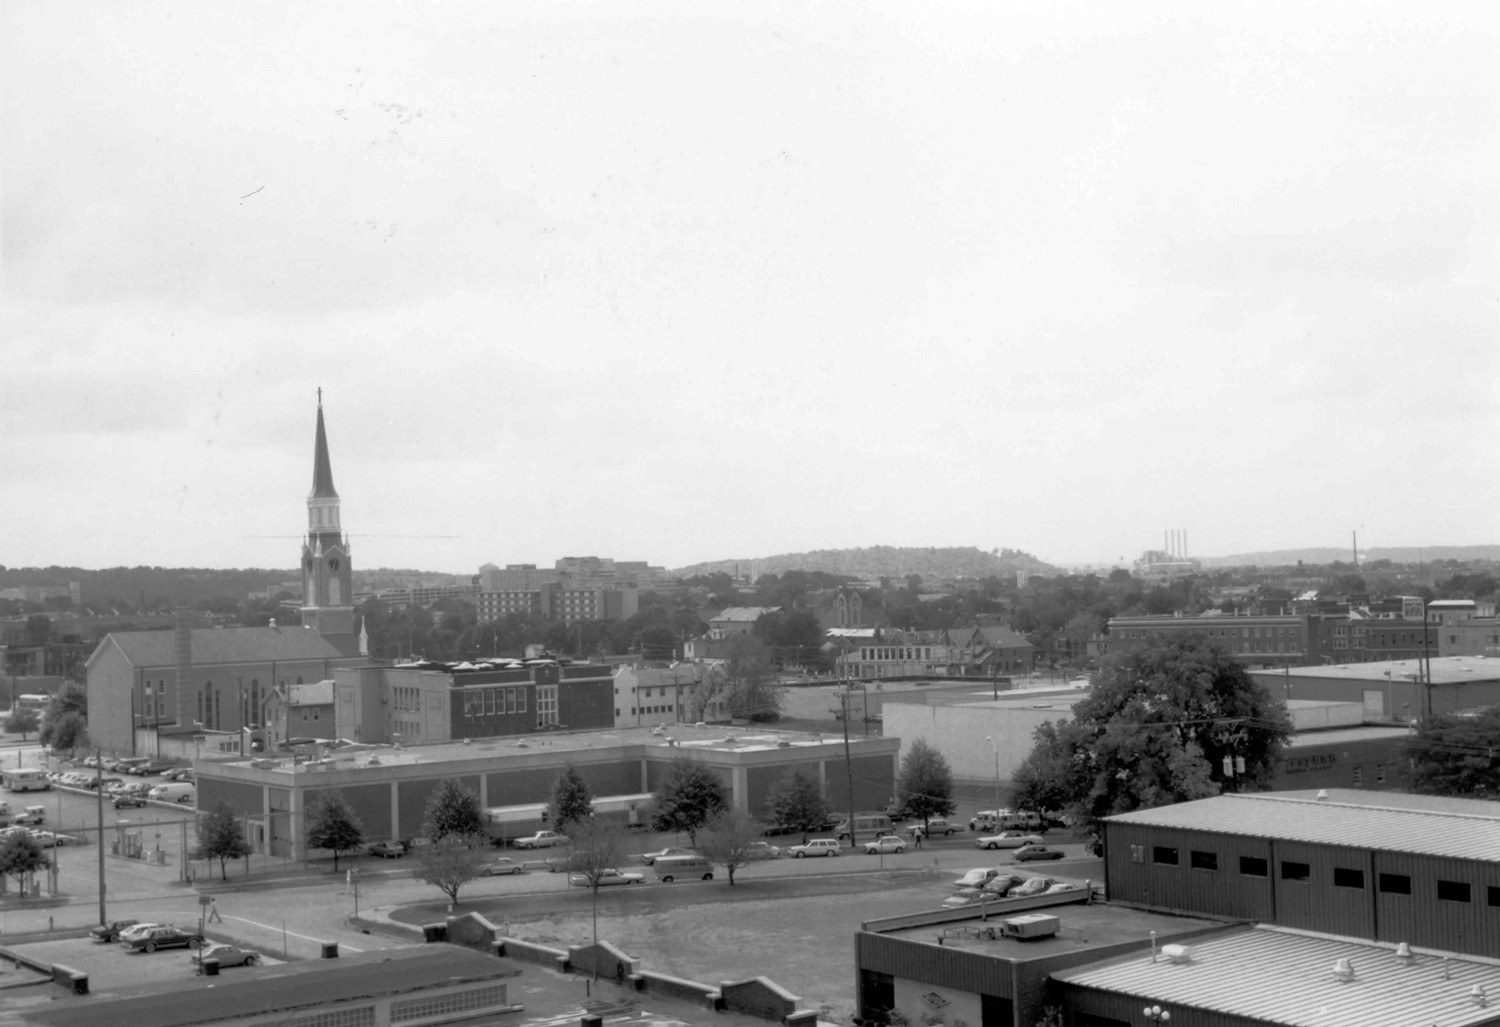 Dayton Motor Car Company, Dayton Ohio Looking toward Holy Trinity Catholic Church. Oregon District to the right in photo (1983)